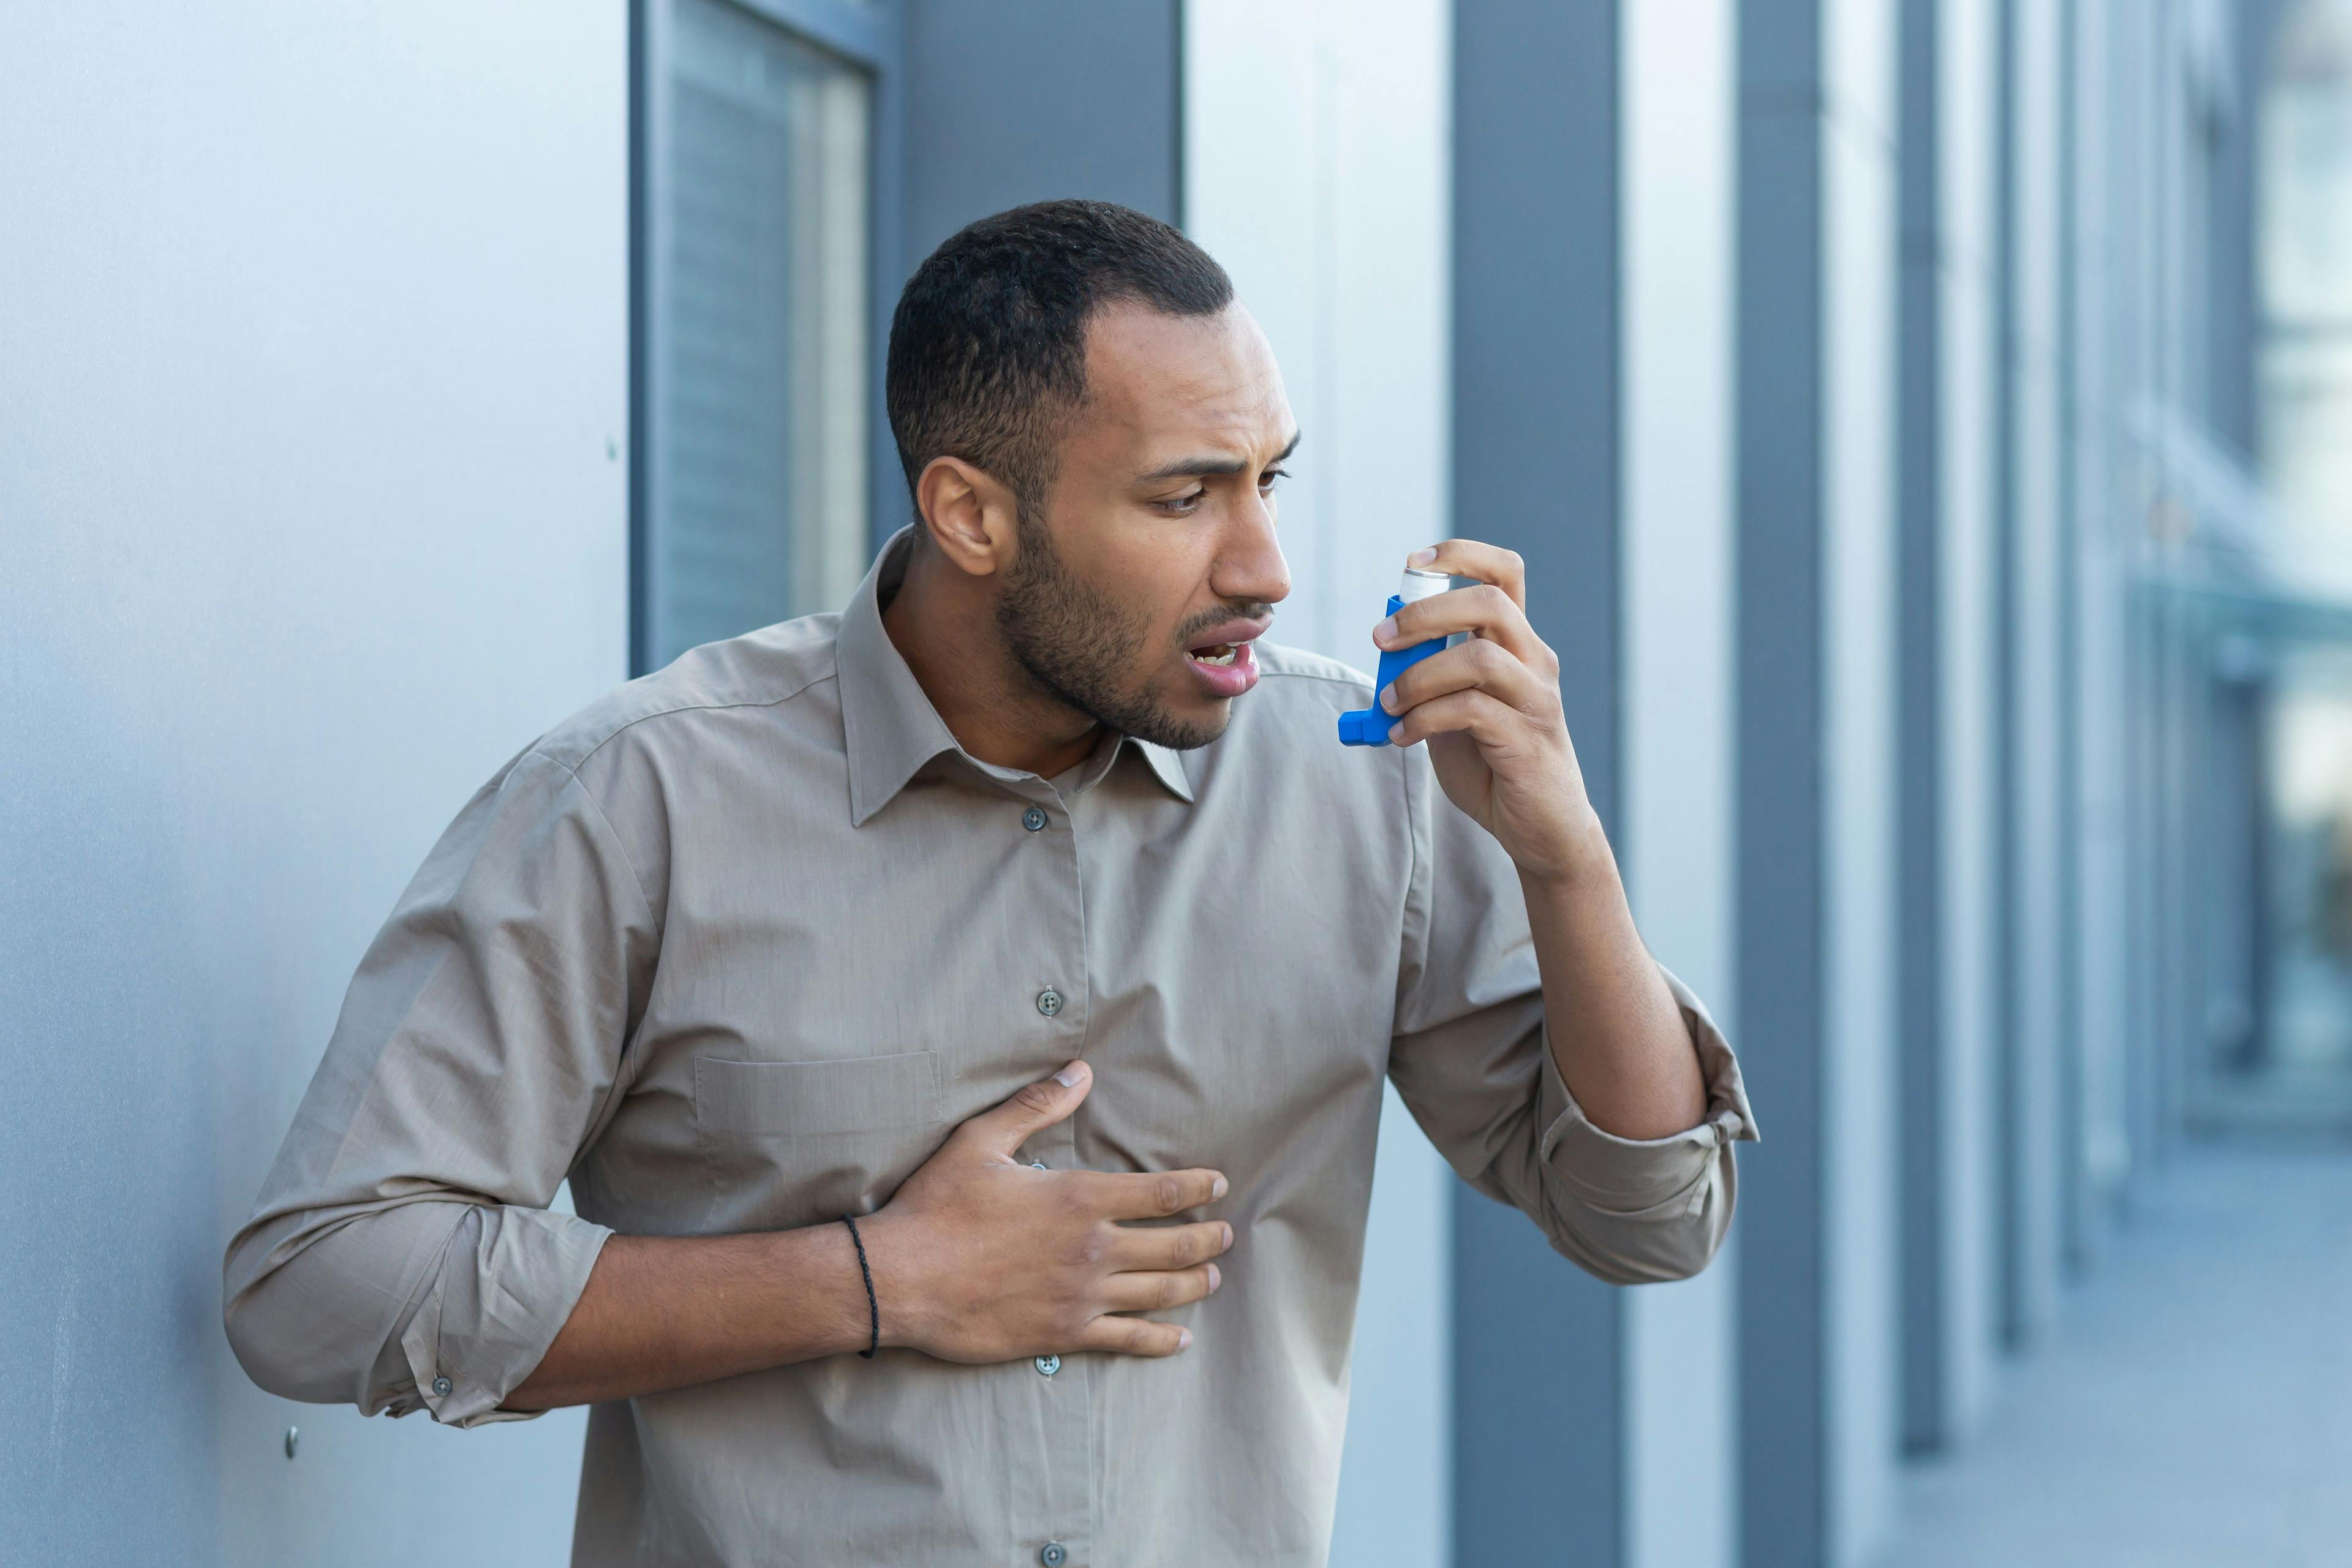 A man outside an office building has a severe asthma attack | Liubomir - stock.adobe.com